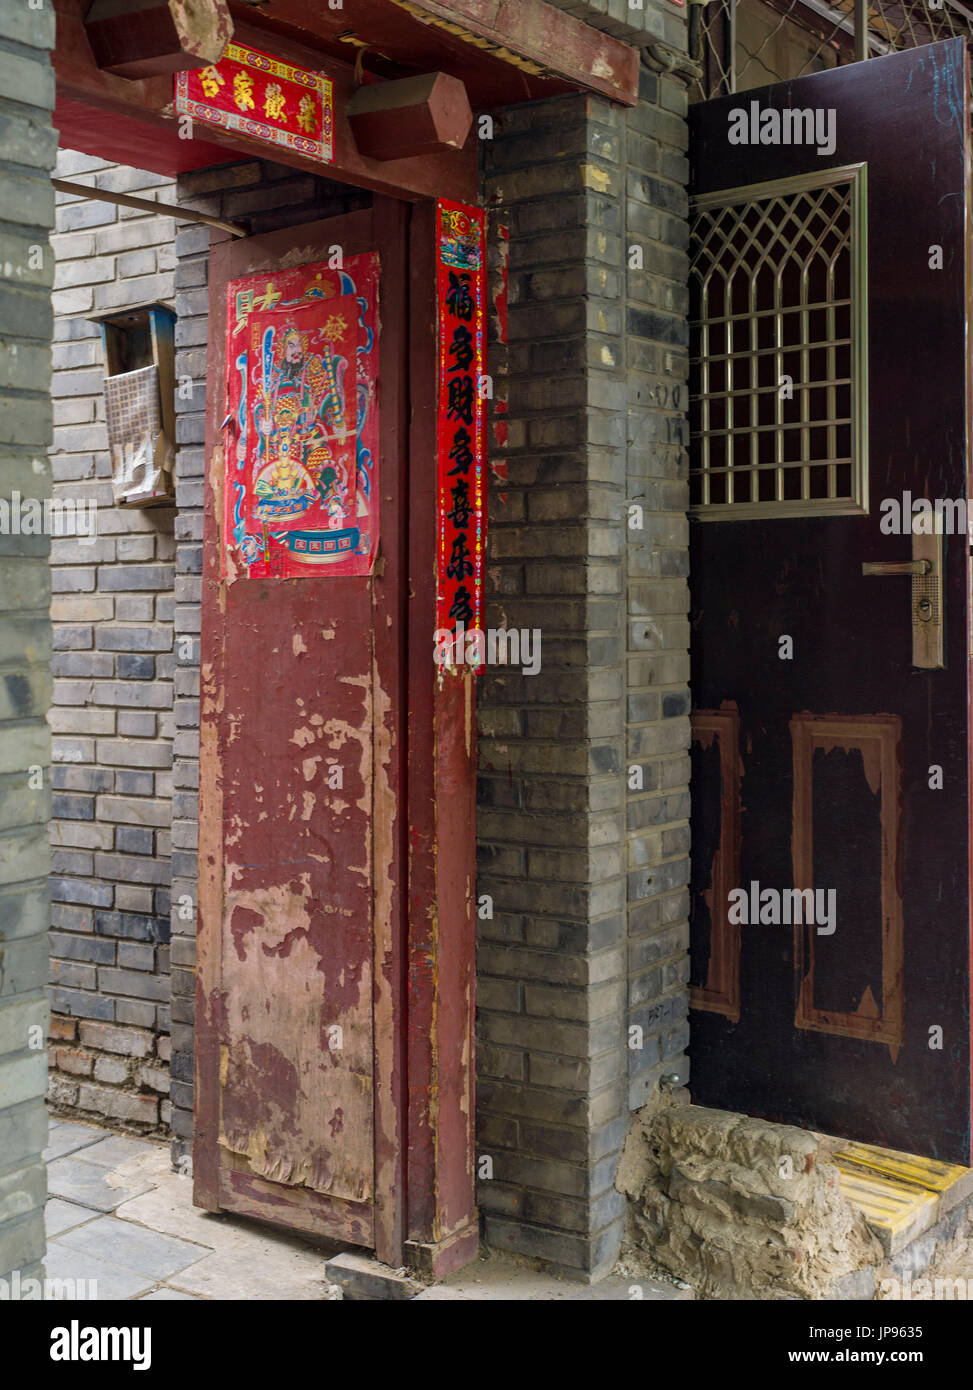 Dragons, Stone Carving, Qianmen Street, Beijing, China Stock Photo